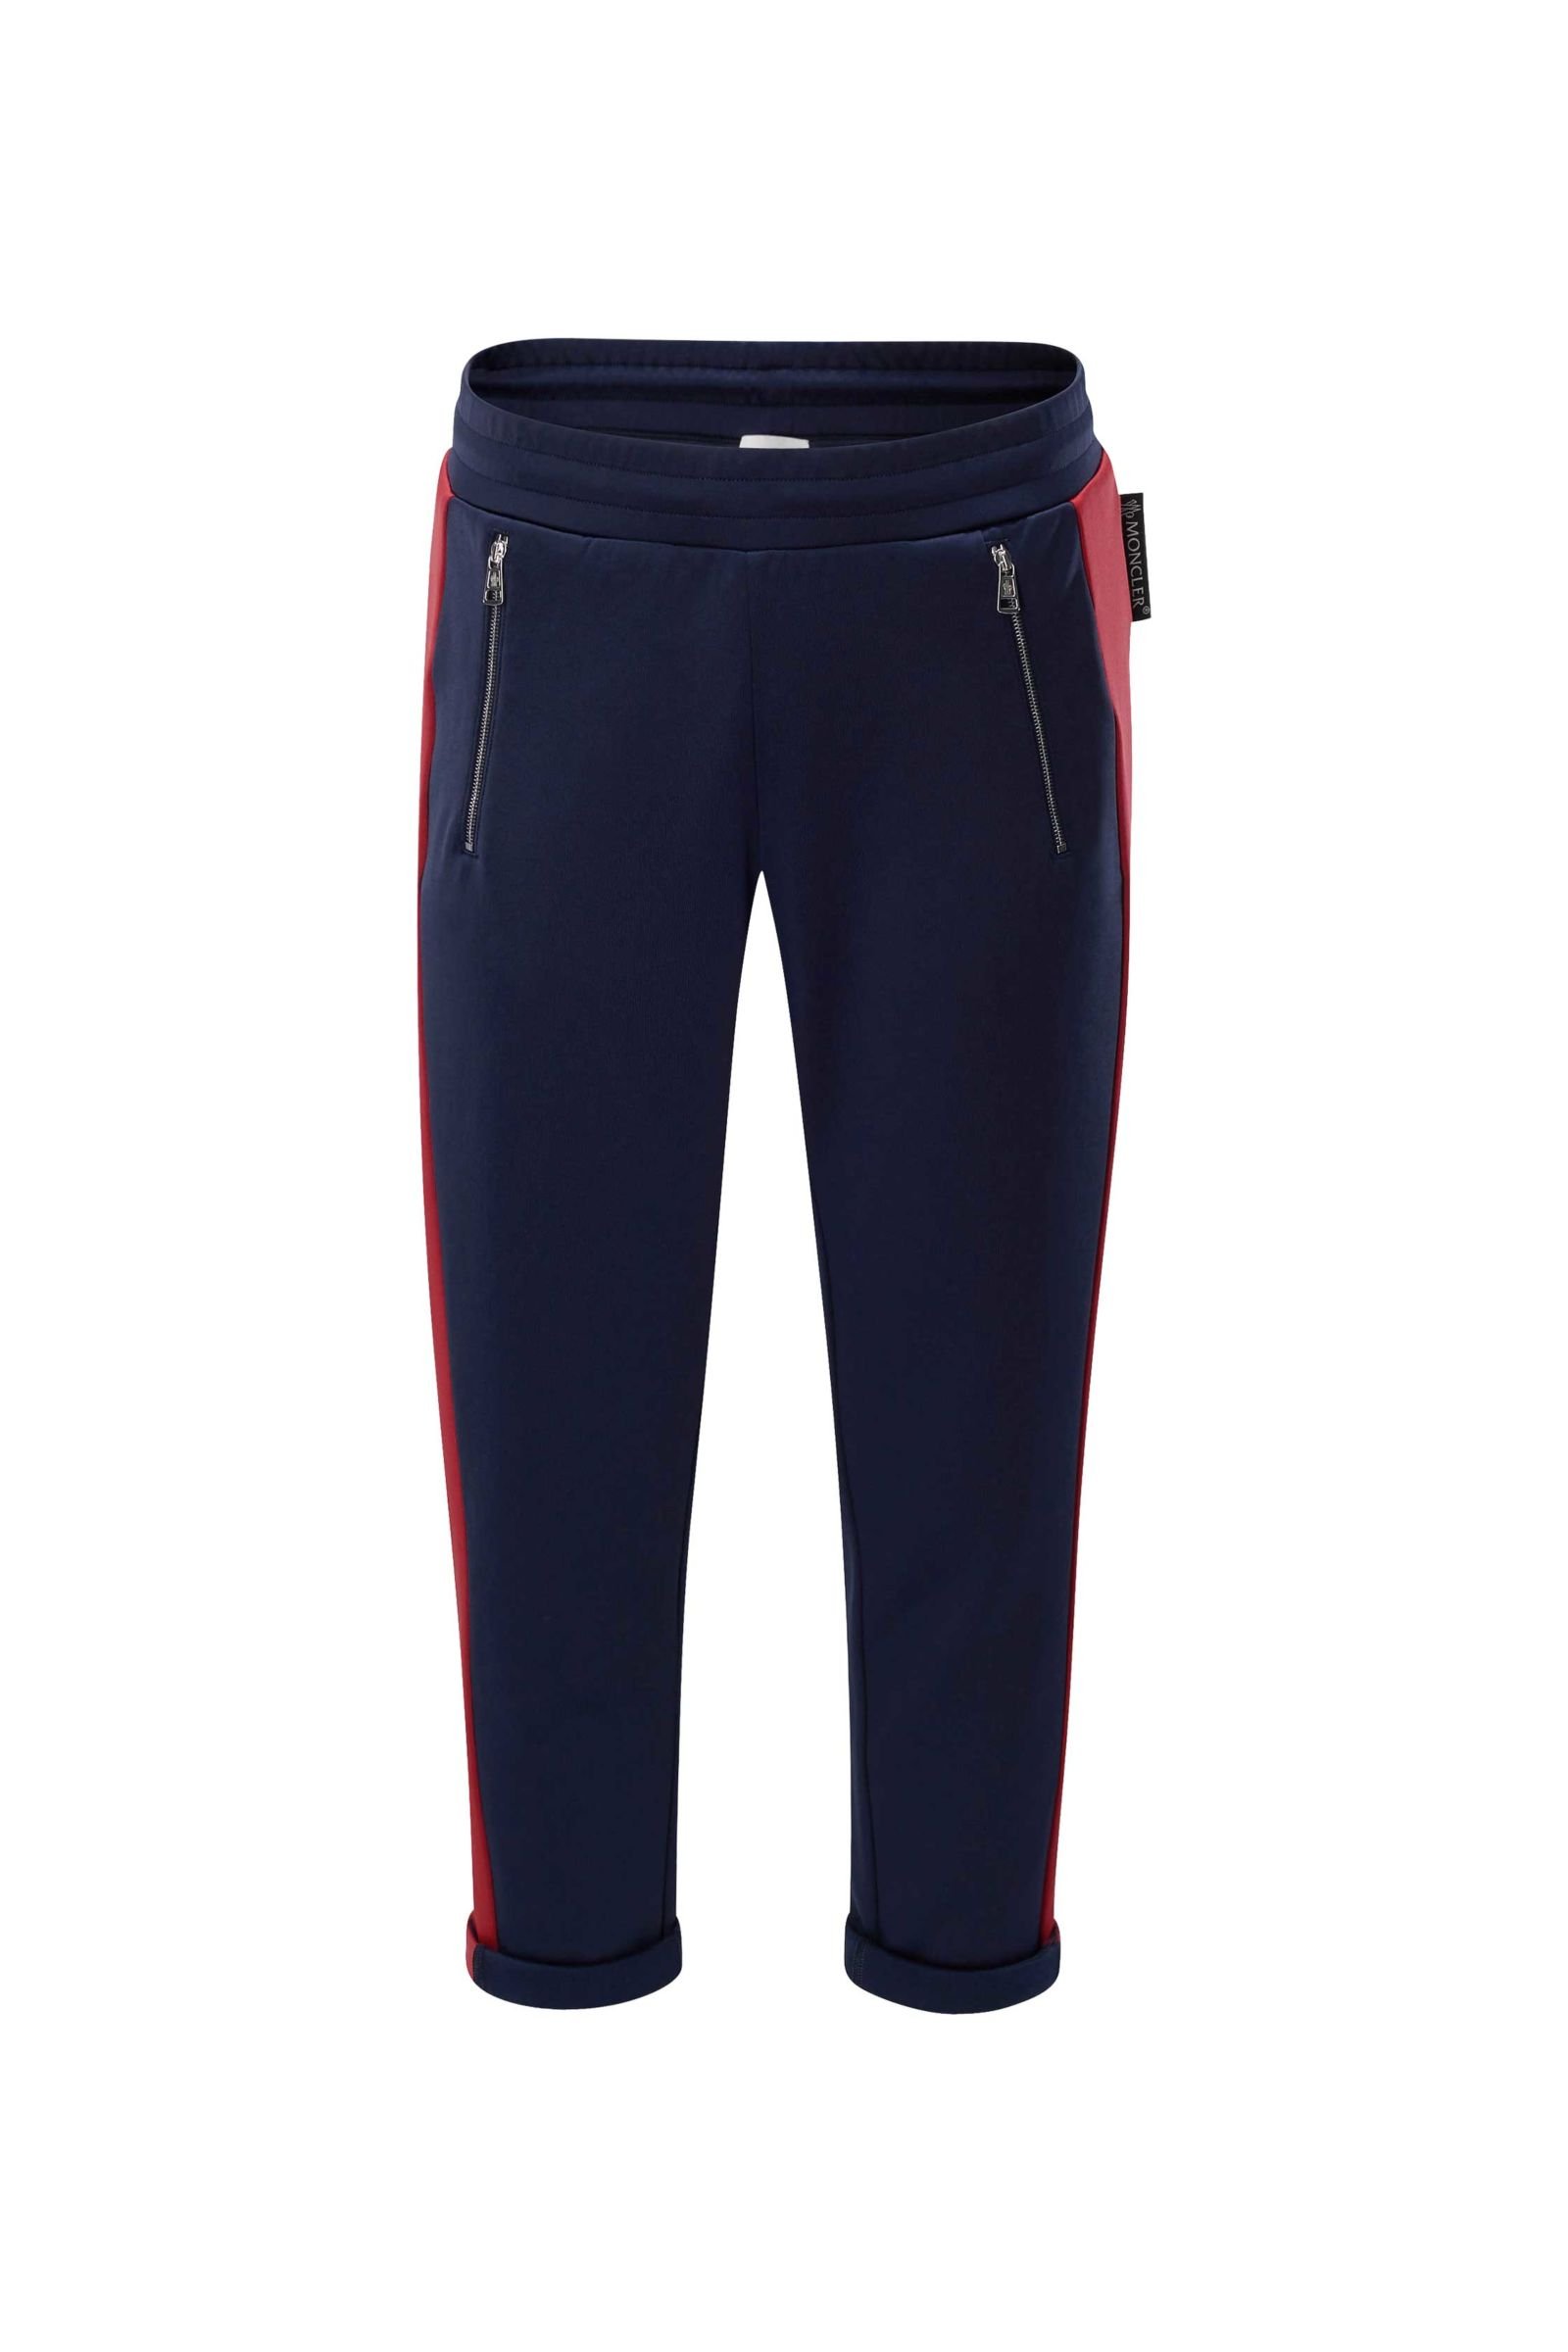 Jersey jogger pants navy